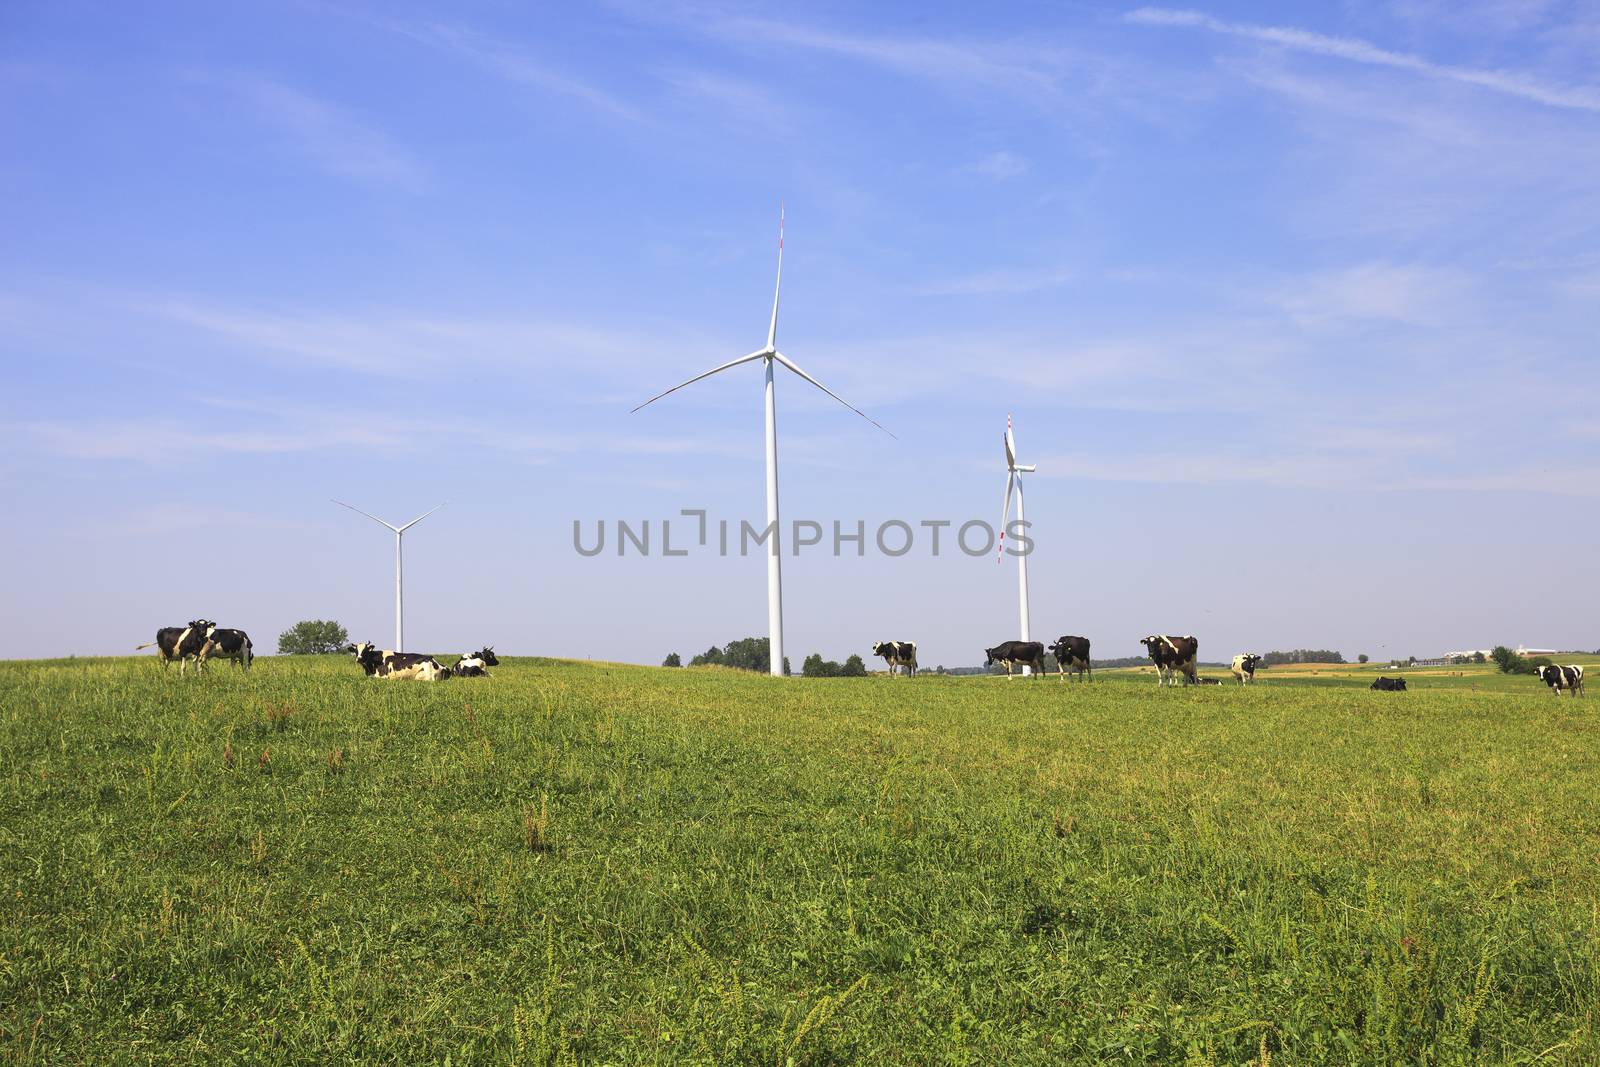 Cows grazing near wind turbines. Poland countryside